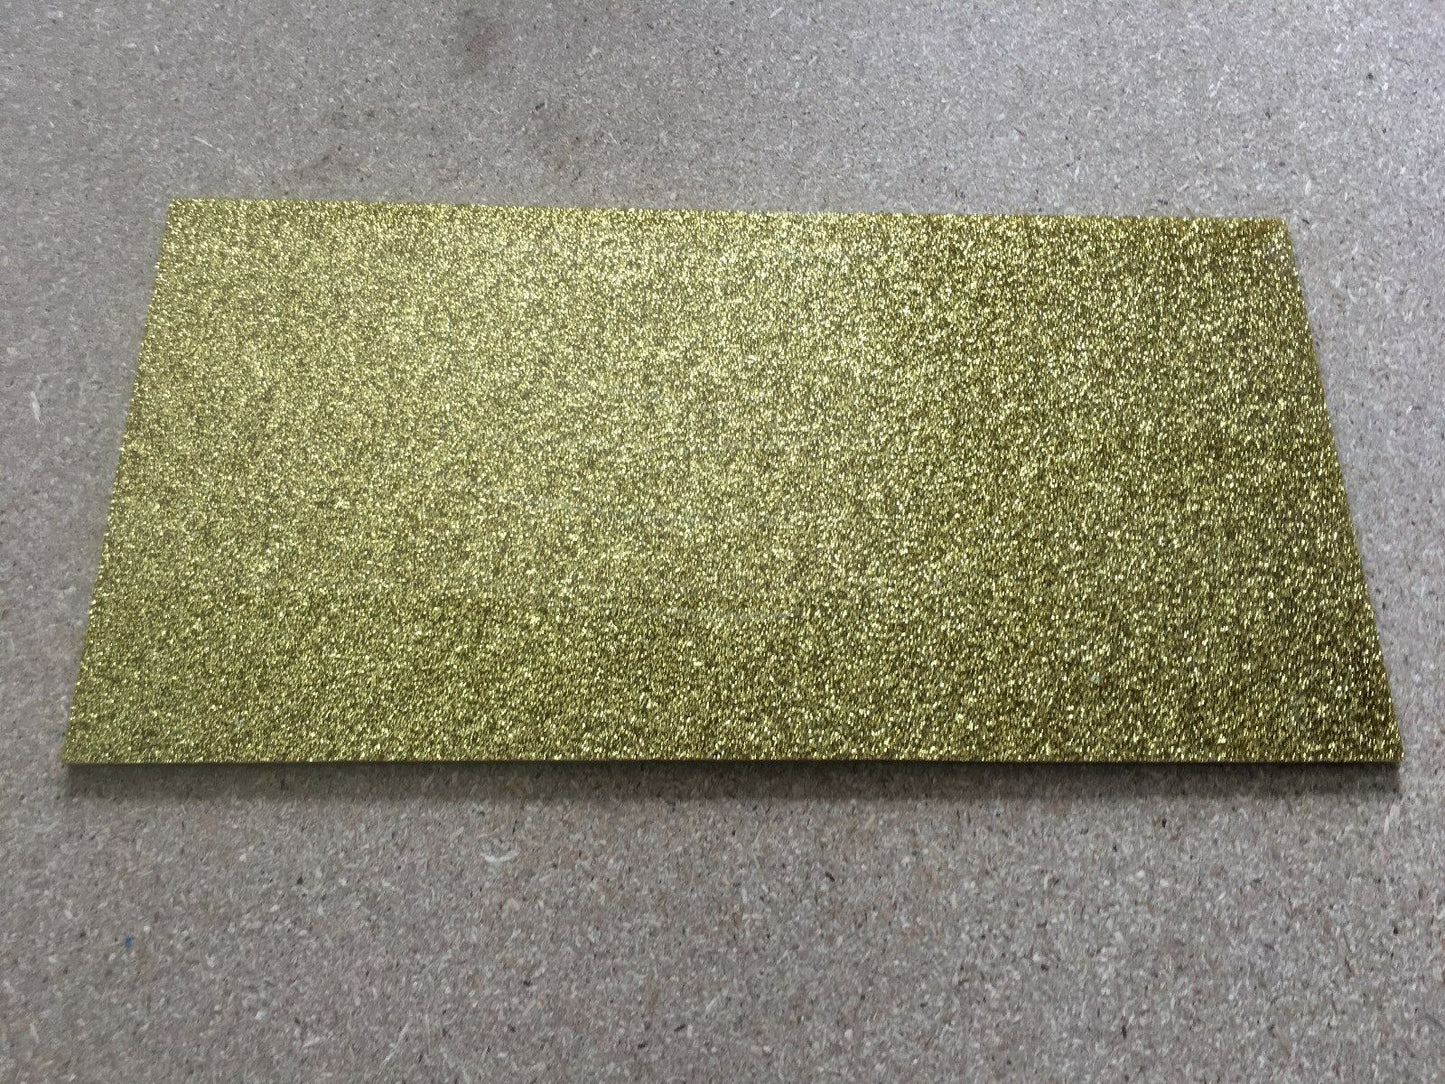 Kirinite Gold Stardust 1/8" x 6" x 12" Sheet - UK Pen Blanks